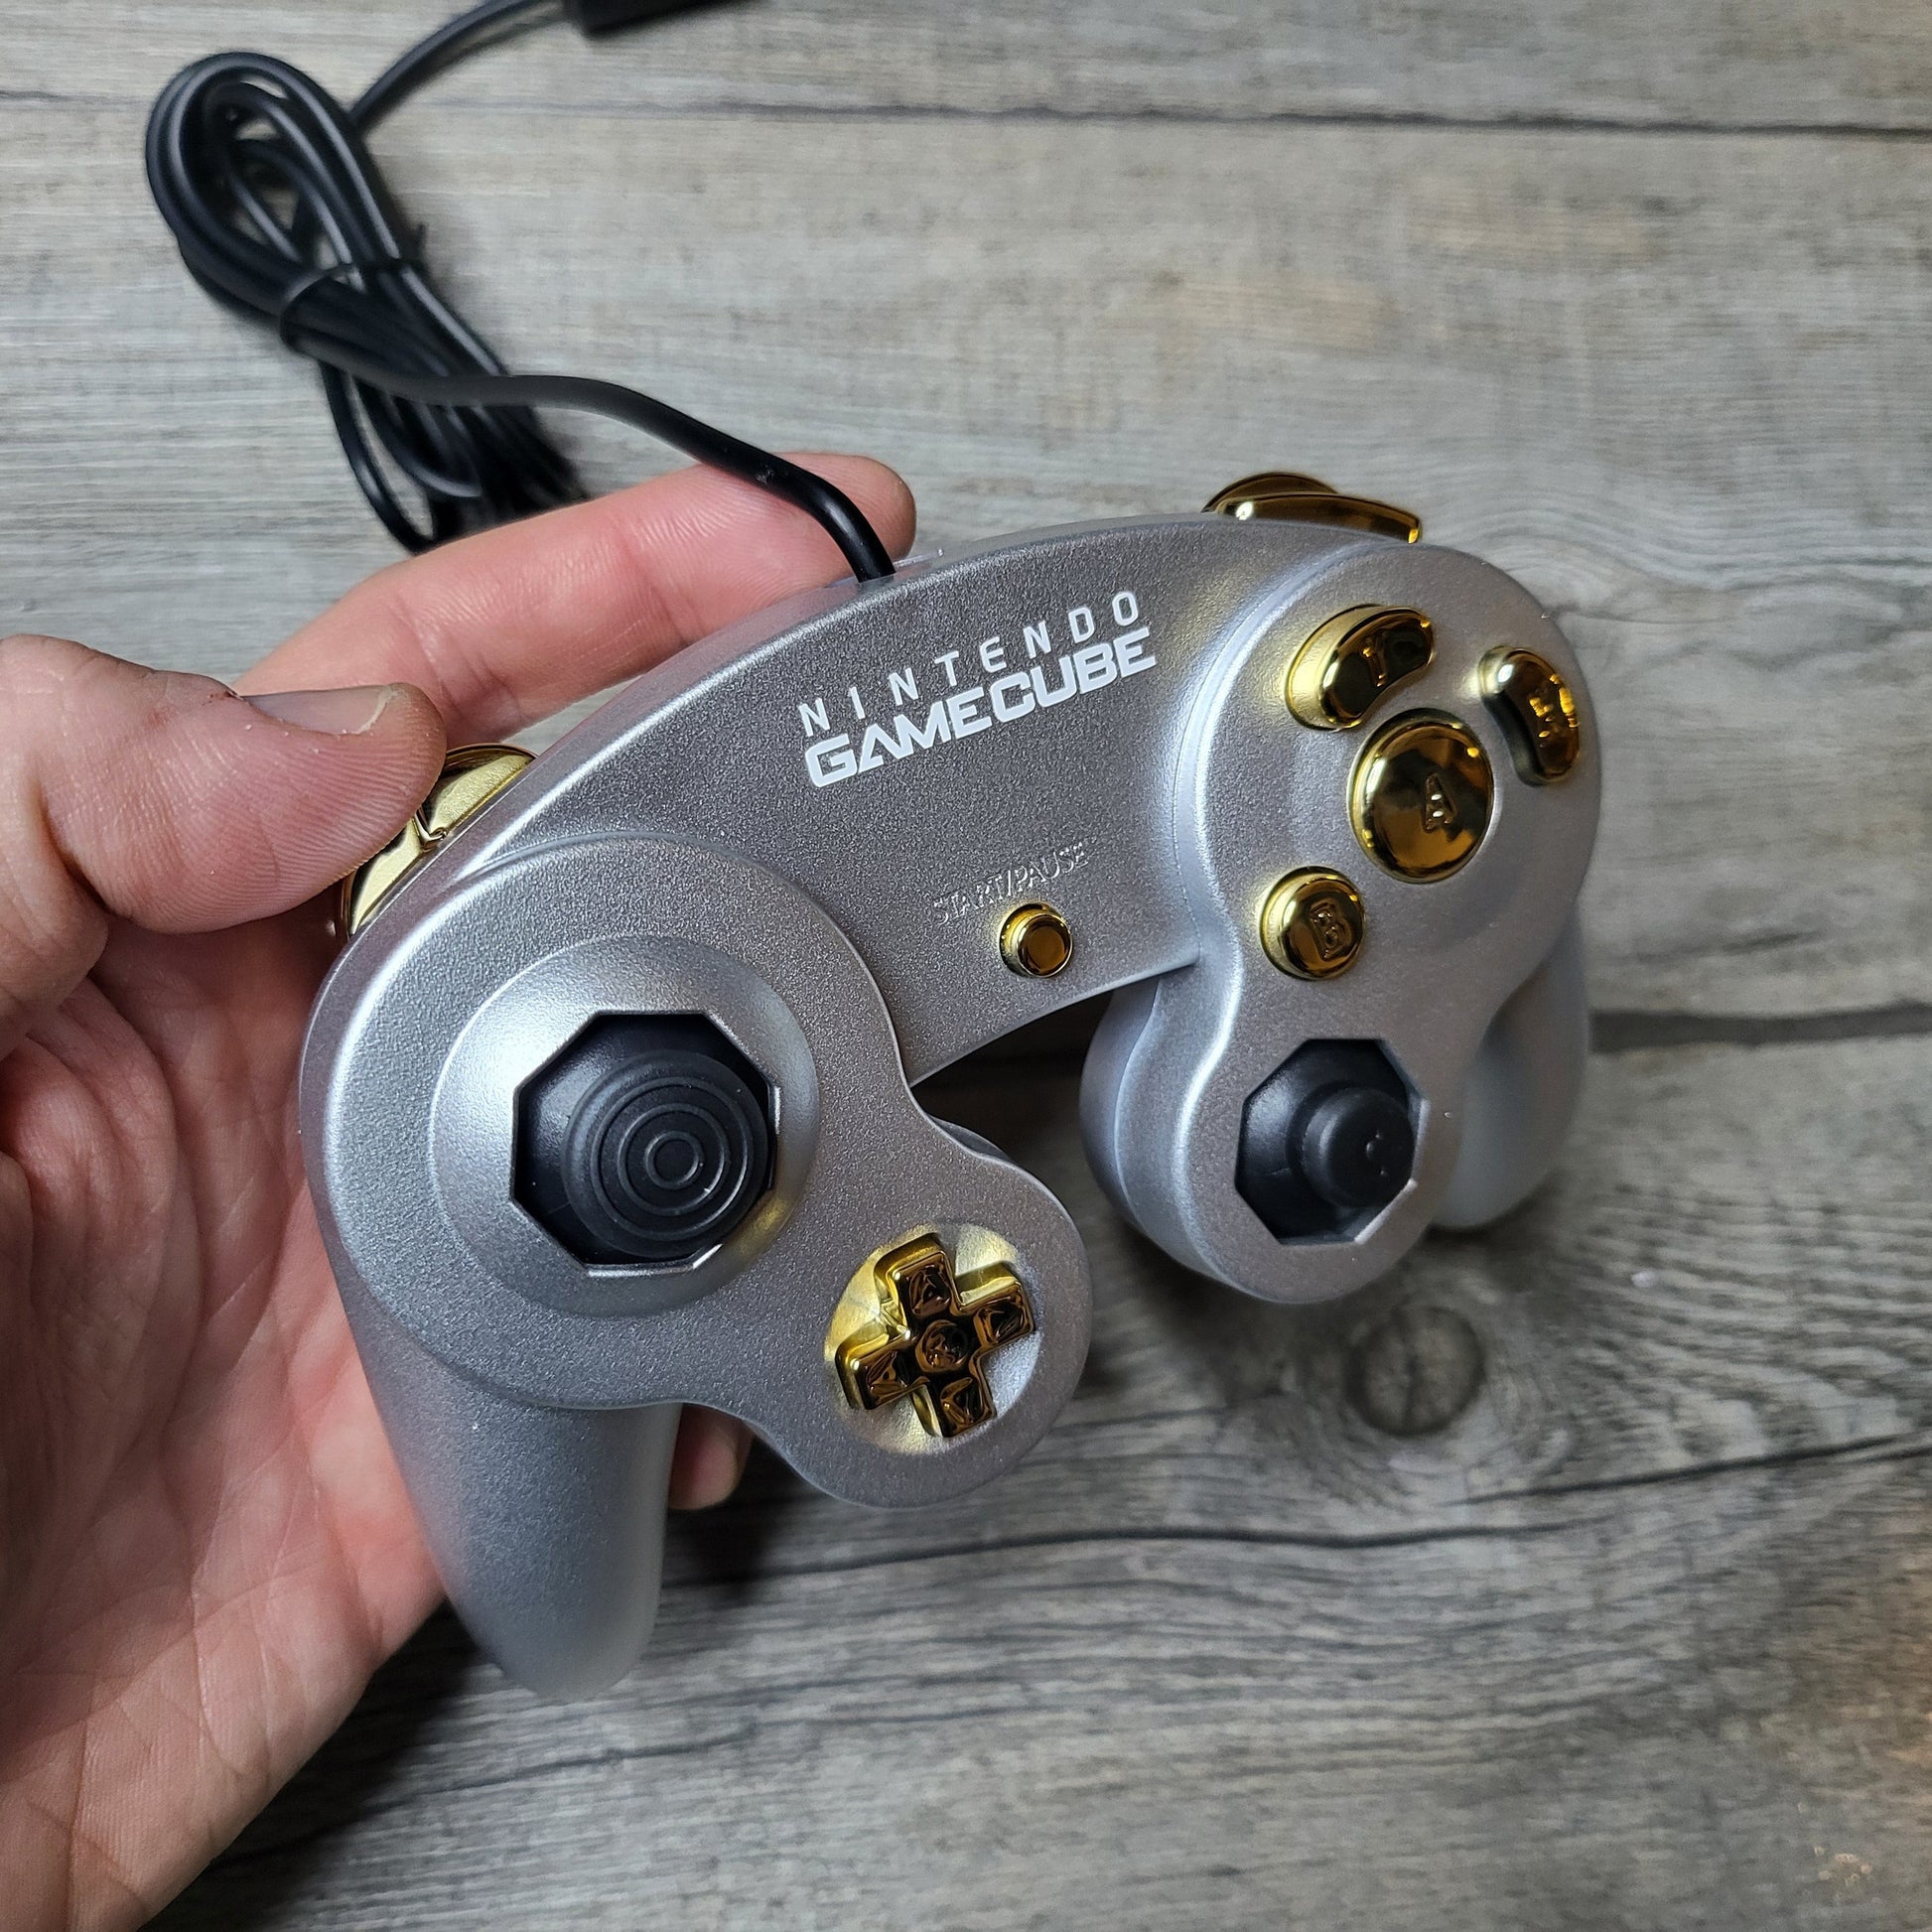 Custom gamecube controller for Nintendo